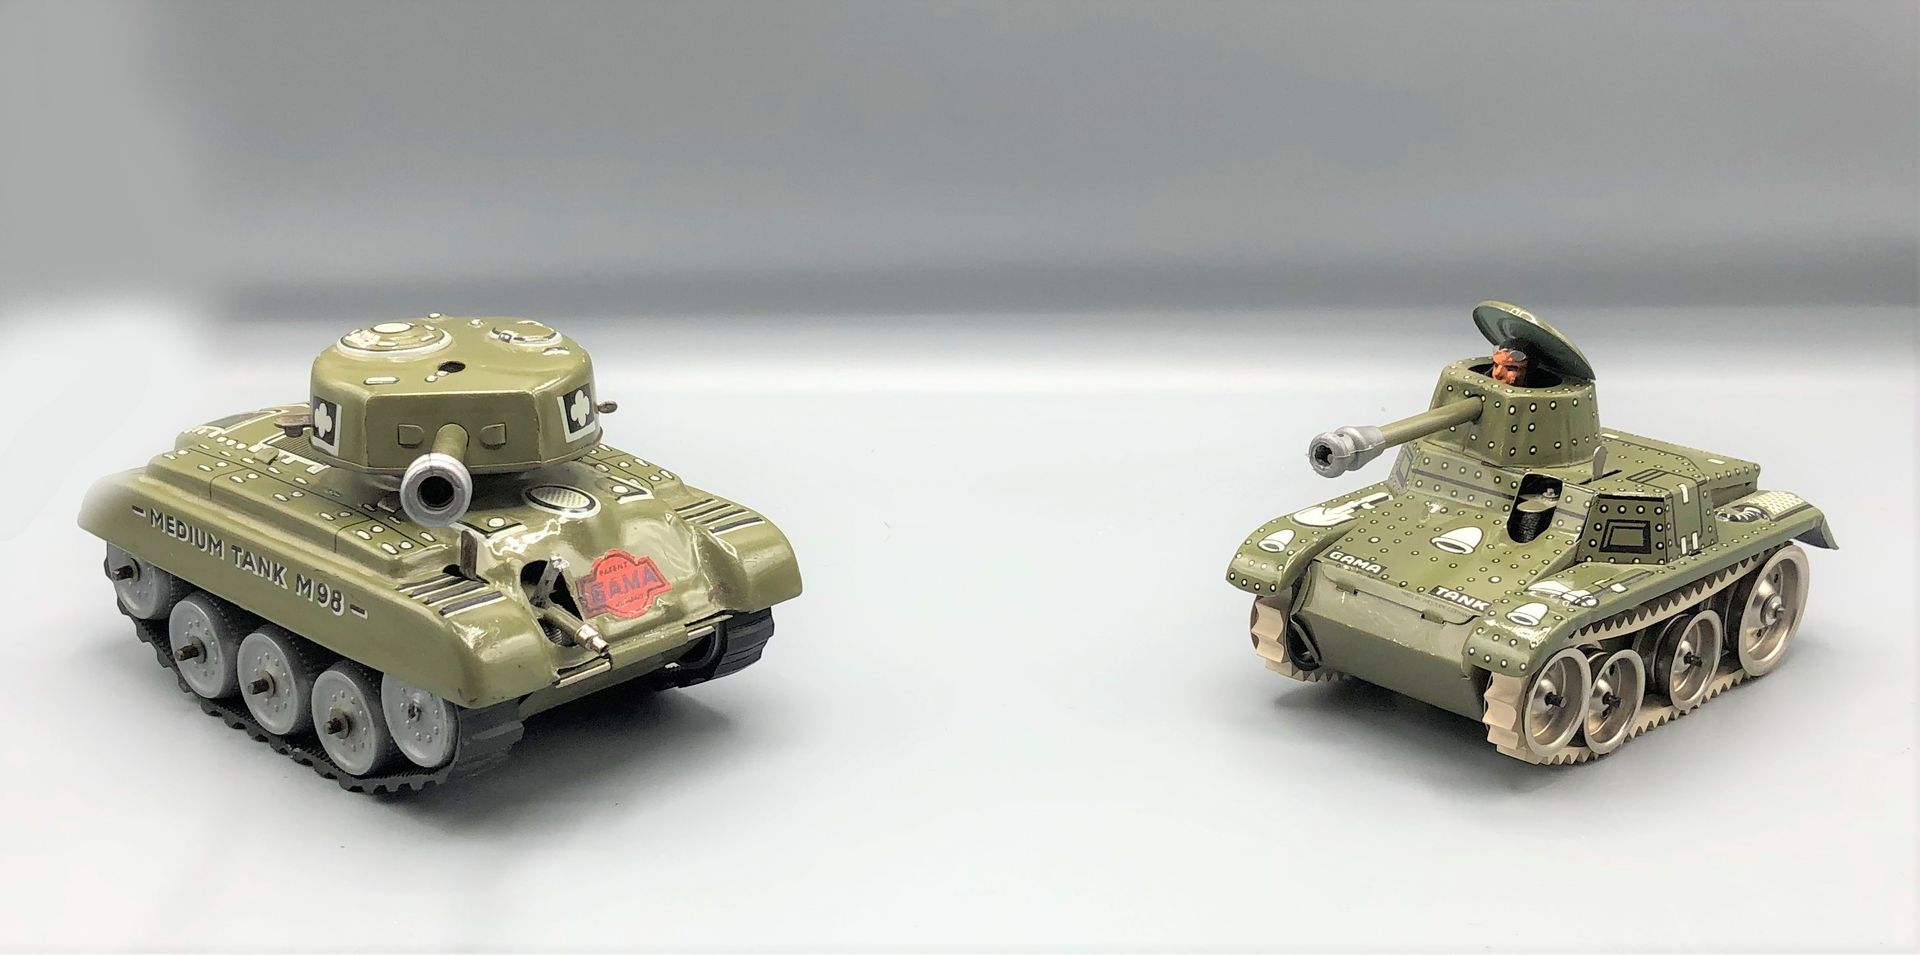 Null GAMA

两辆机械坦克，一辆配有低机枪，另一辆配有射击坦克指挥员

1950



使用状况

更多信息请联系该研究。